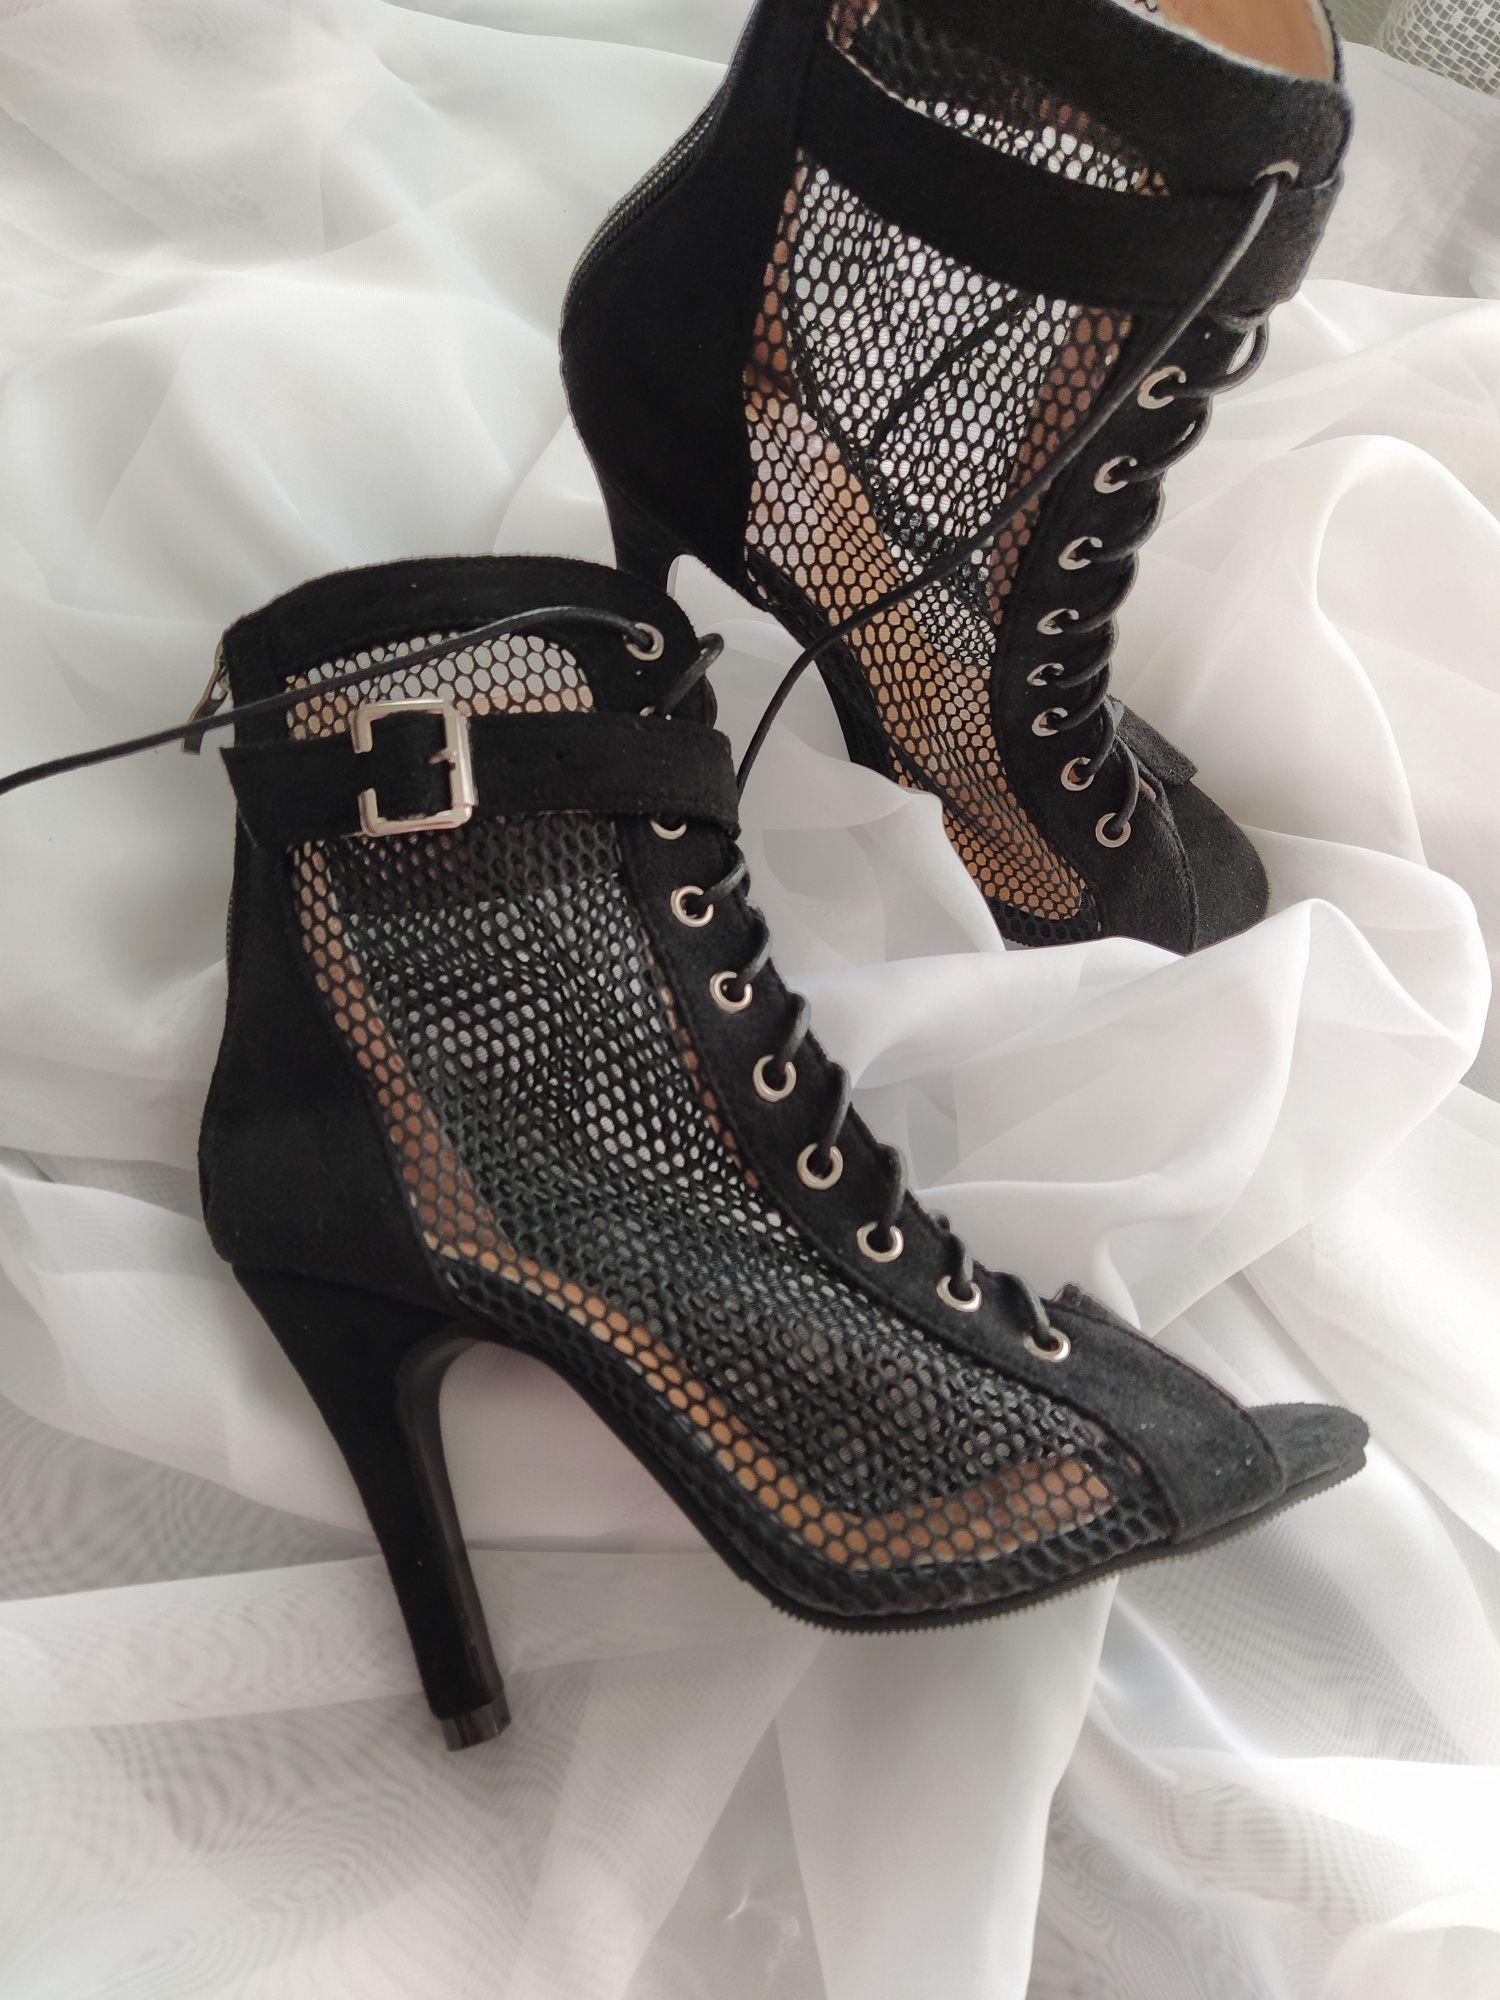 High heels, хілси, хилсы, взуття для танців хай хілс